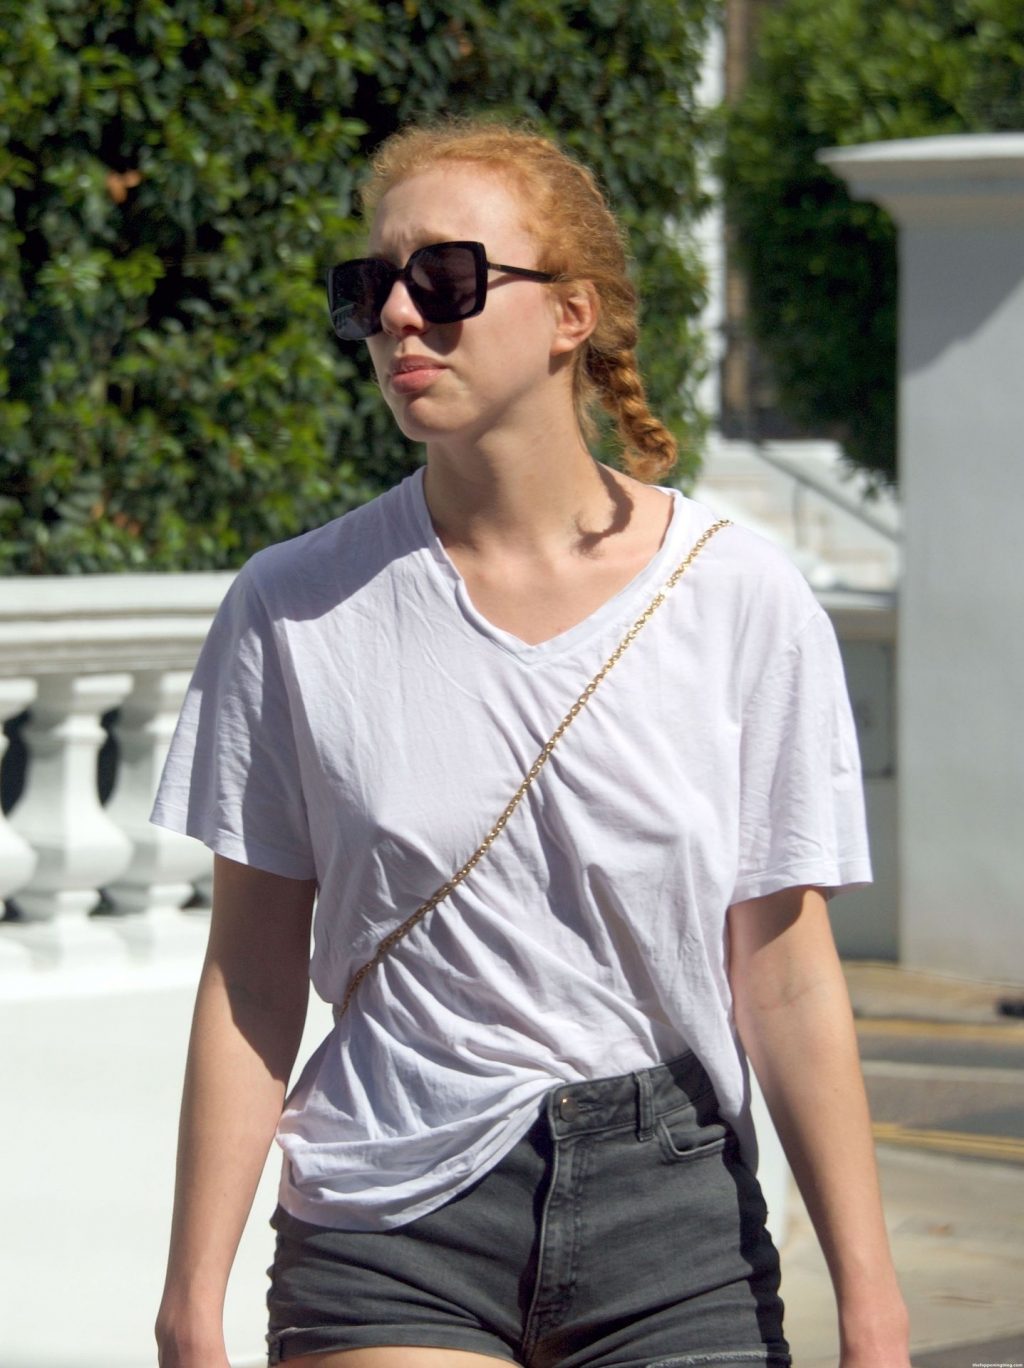 Braless Anna Ermakova Shows Off Her Fashionable Dress Sense As She Strolls in London (56 Photos)